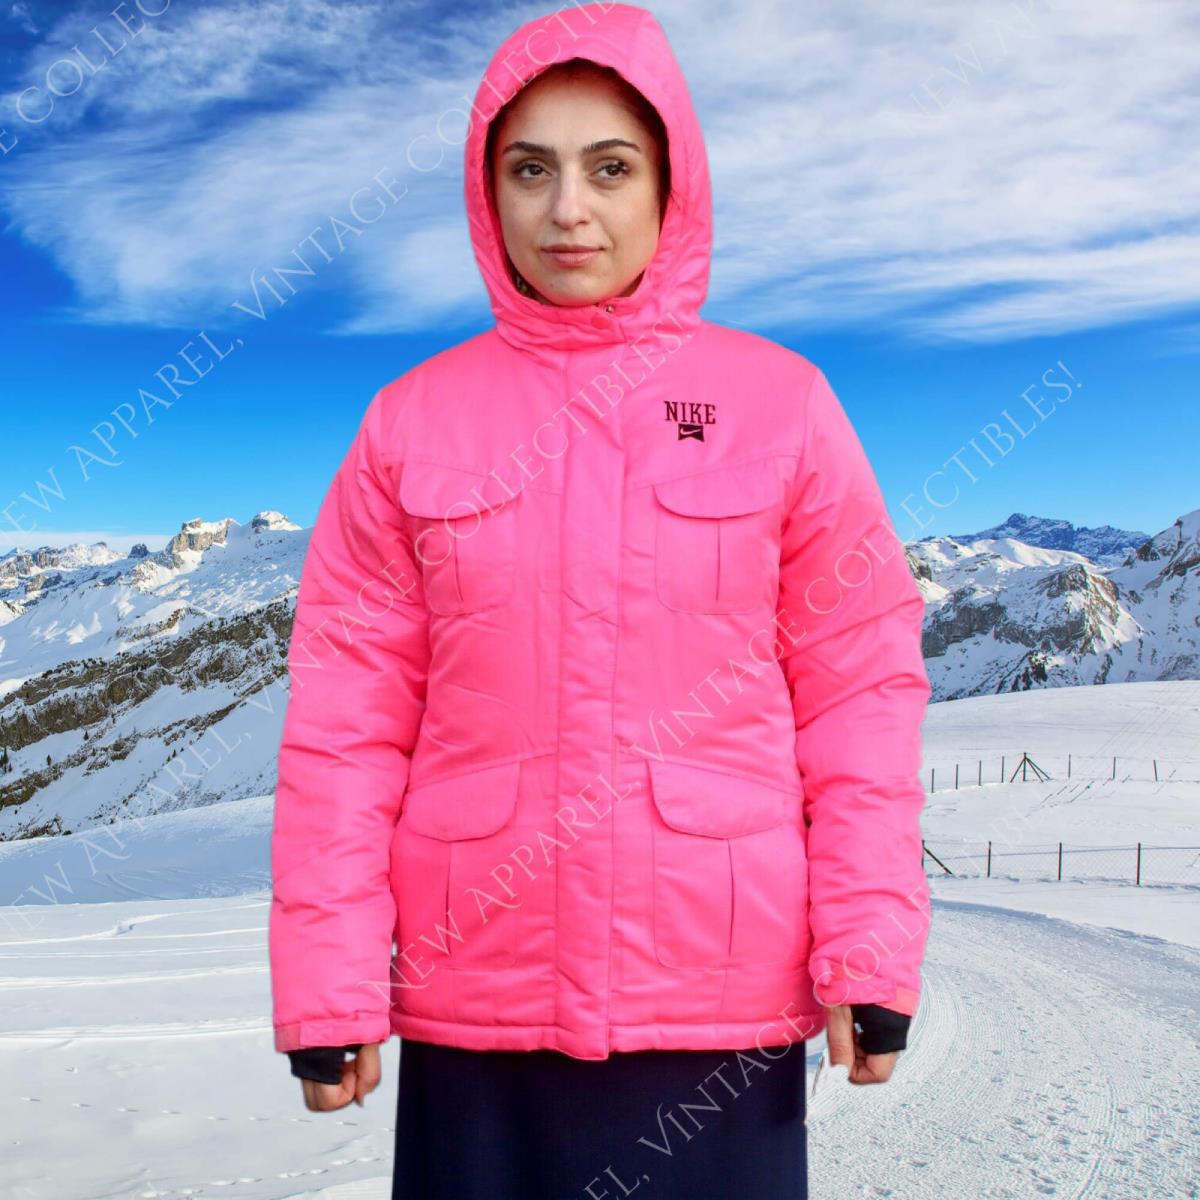 Girls Size XL 18 Nike Heavyweight Winter Parka Ski/snowboard Jacket Hooded Coat